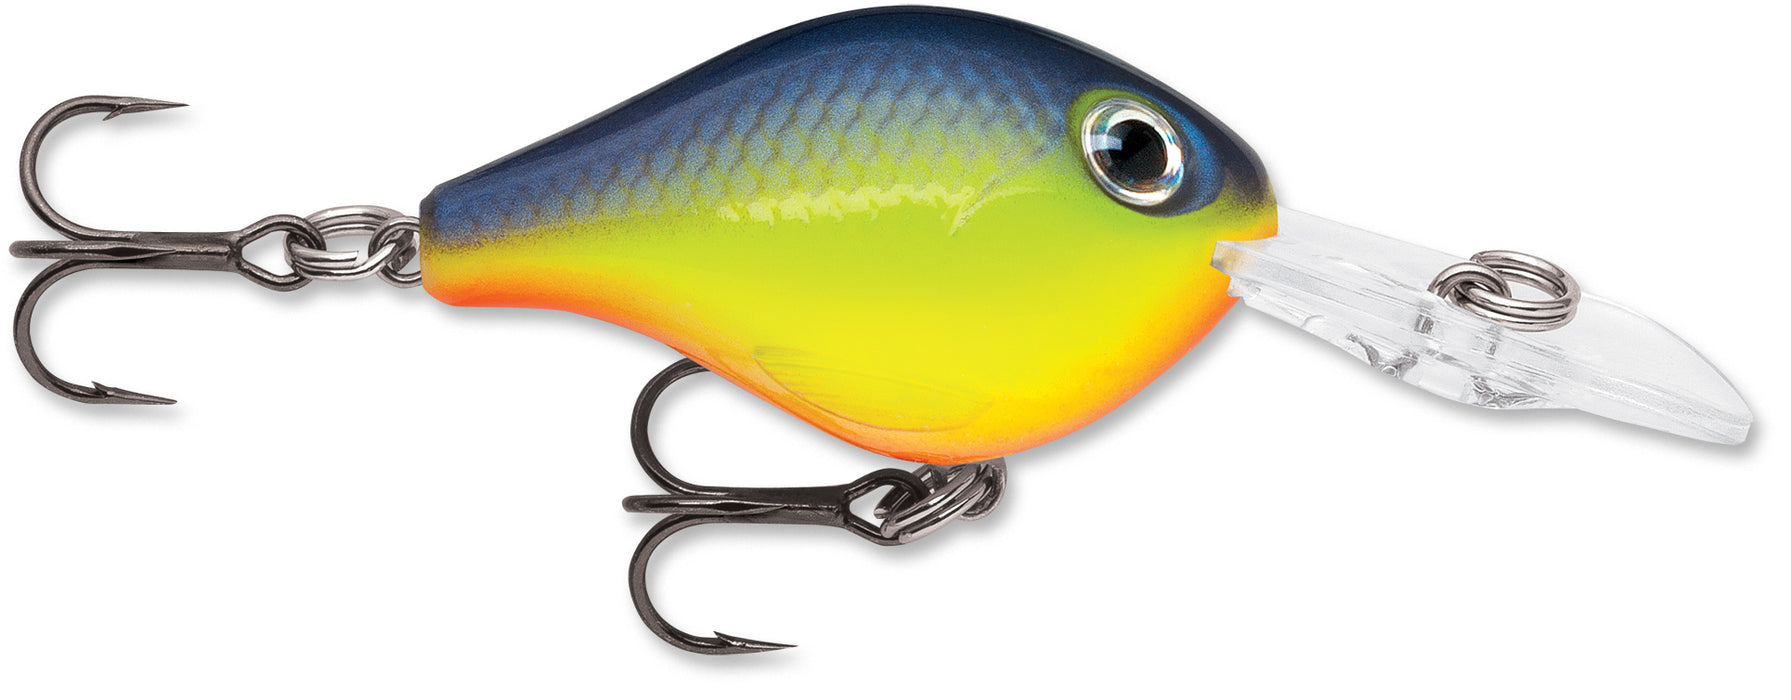 Rapala Ultra Light Crank 3 Fishing Lure, Yellow Perch, 1-/2-Inch